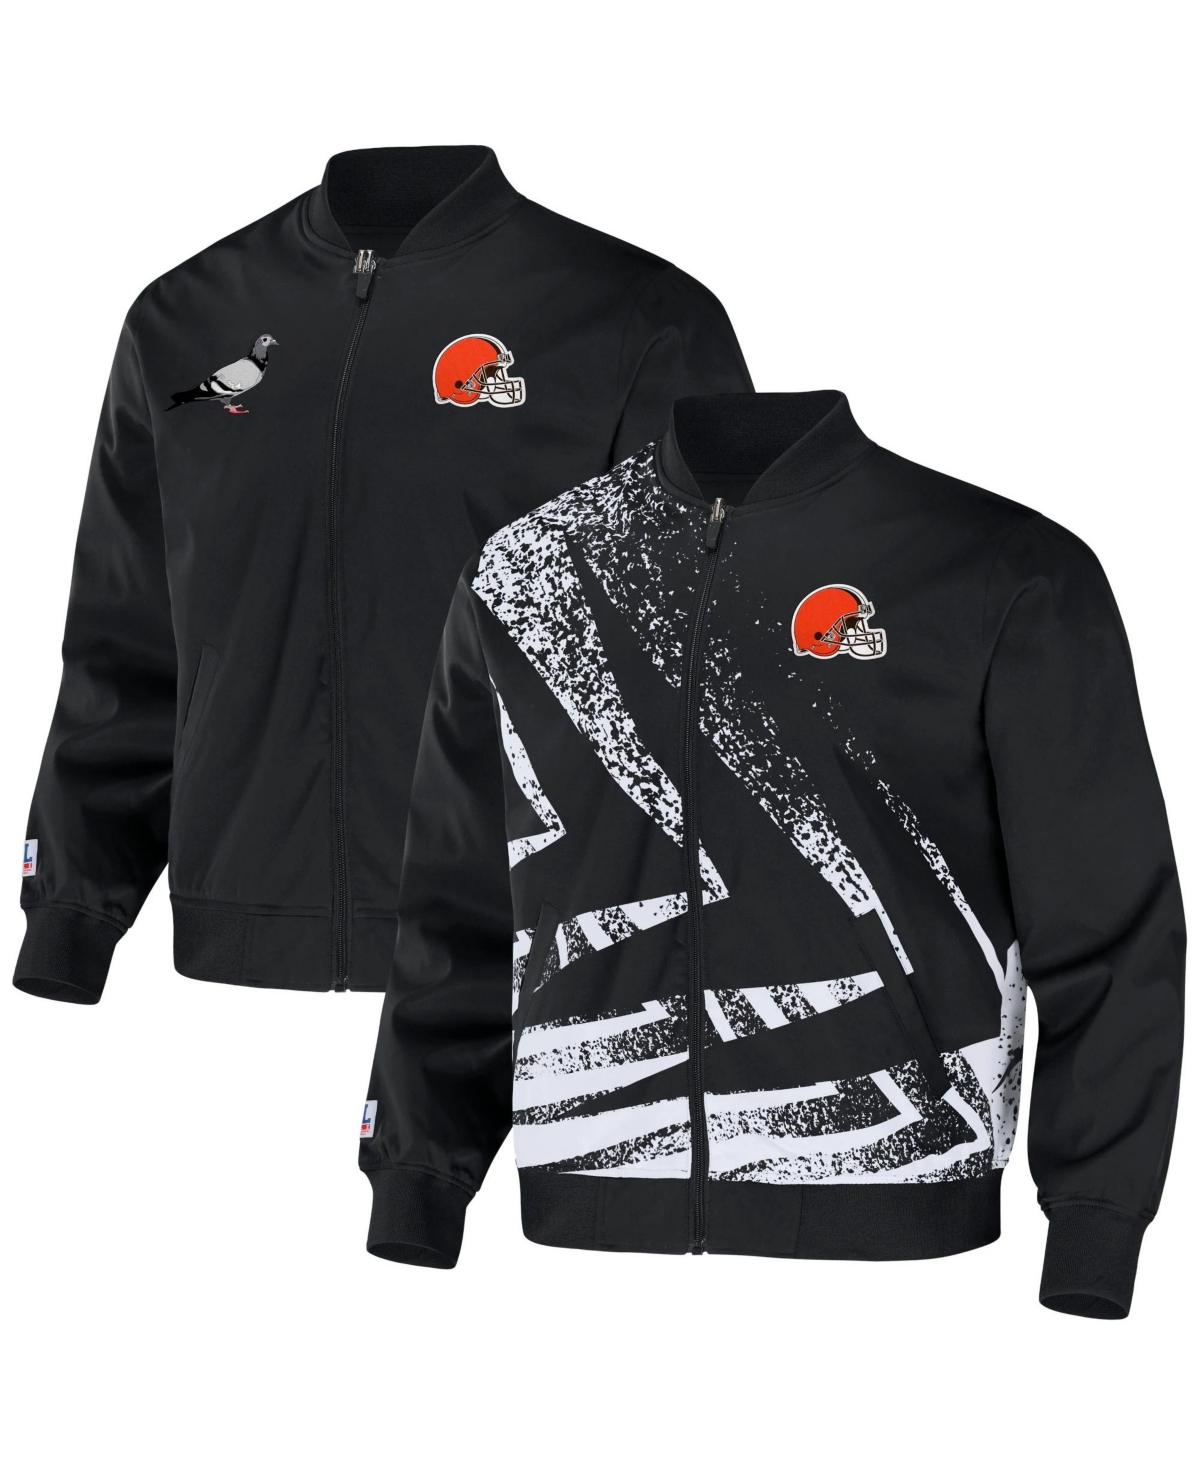 Shop Nfl Properties Men's Nfl X Staple Black Cleveland Browns Embroidered Reversable Nylon Jacket